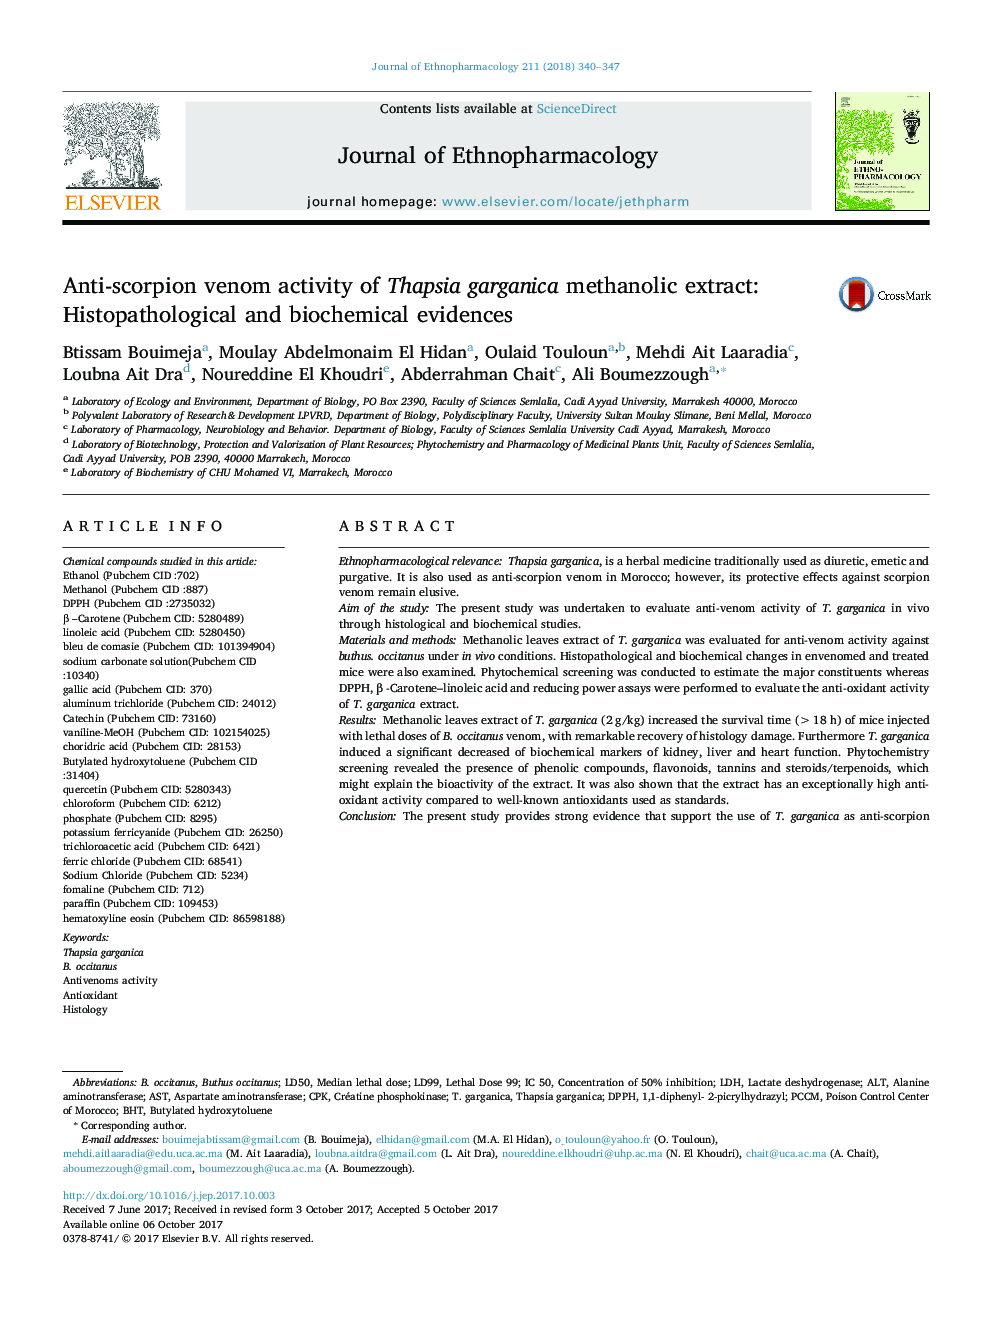 Anti-scorpion venom activity of Thapsia garganica methanolic extract: Histopathological and biochemical evidences